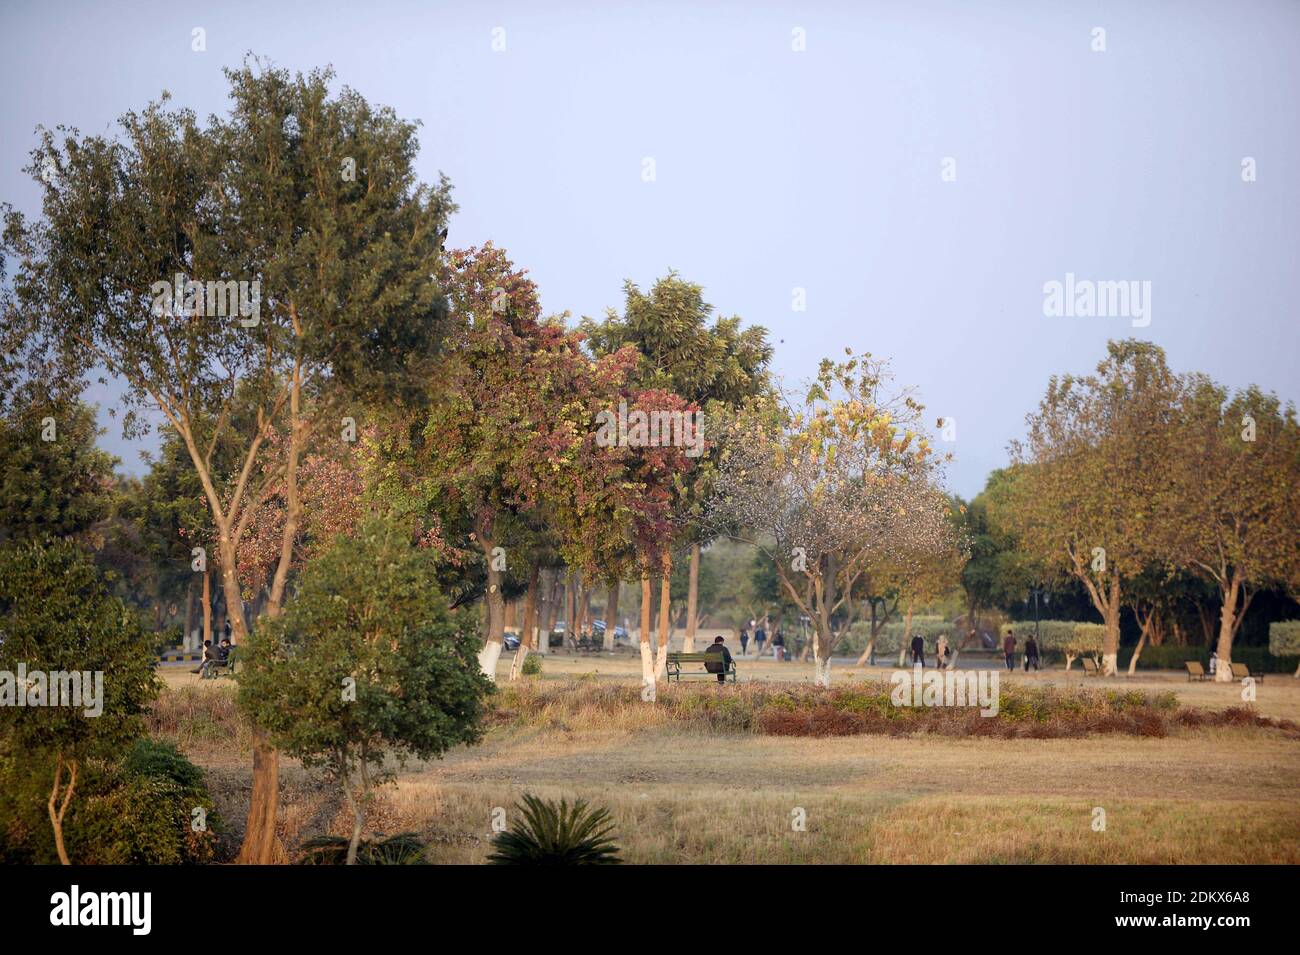 (201216) -- ISLAMABAD, Dec. 16, 2020 (Xinhua) -- Photo taken on Dec. 15, 2020 shows the view of Fatima Jinnah Park in Islamabad, capital of Pakistan. (Xinhua/Ahmad Kamal) Stock Photo